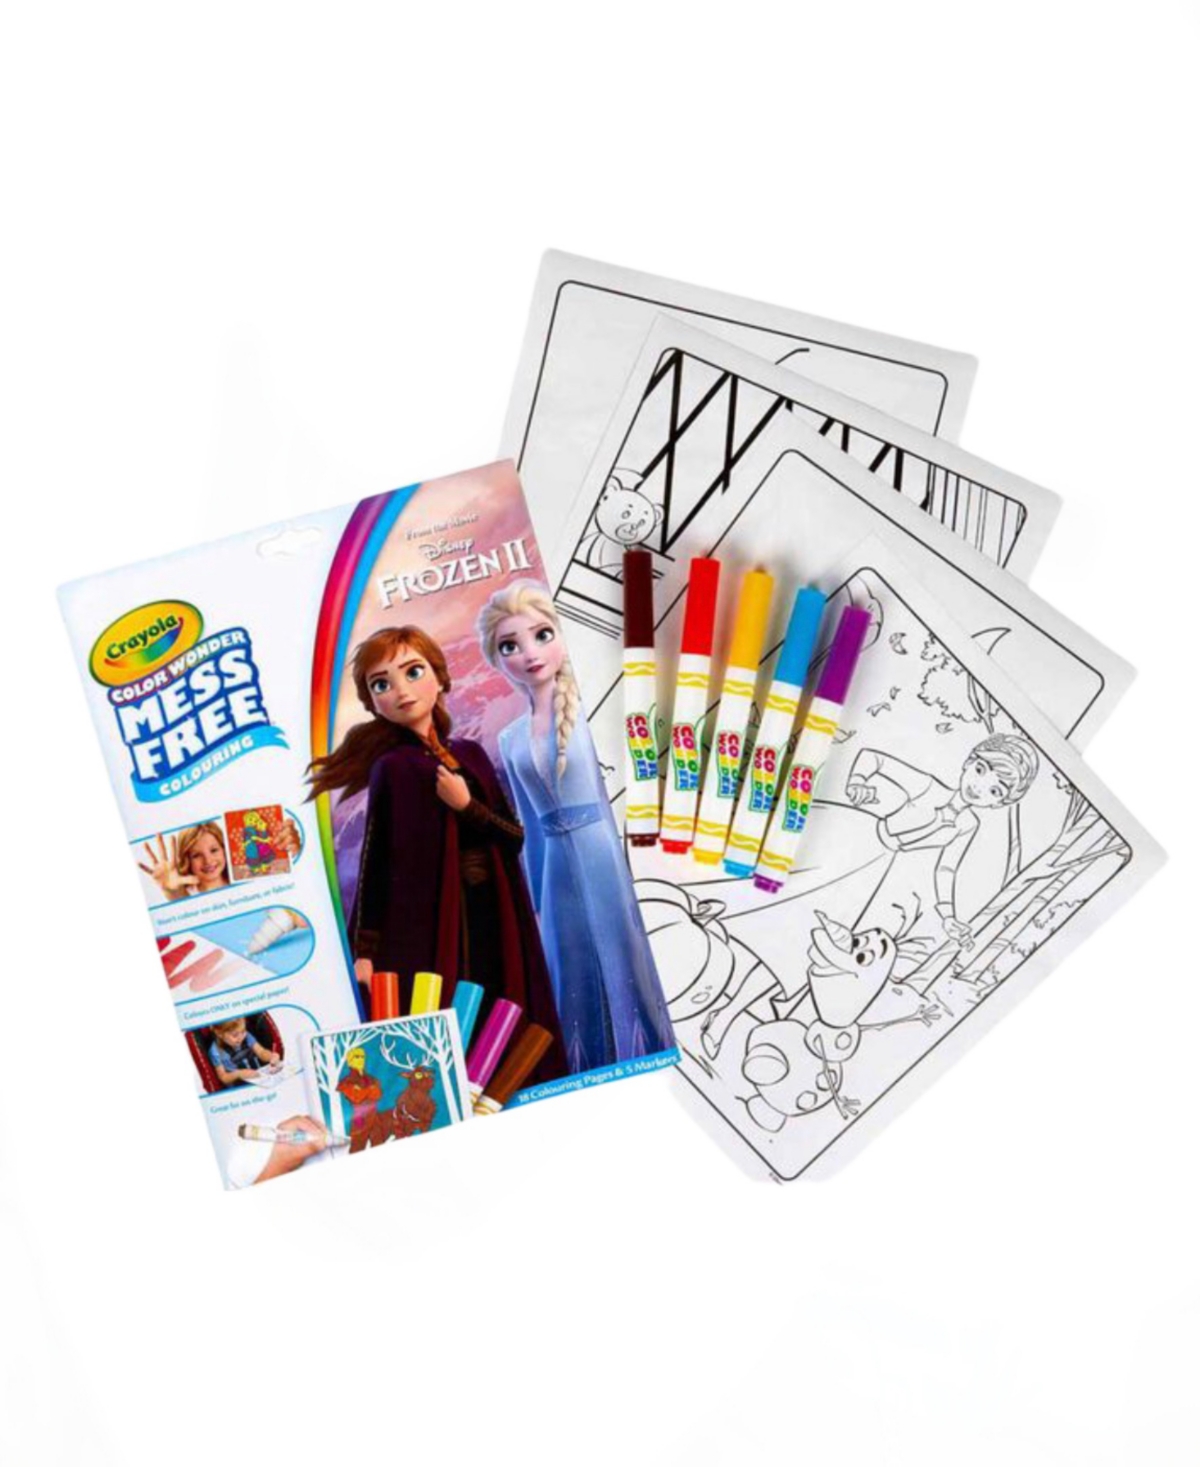 Crayola- Frozen 2 Foldalop Travel Kit - Multi Colored